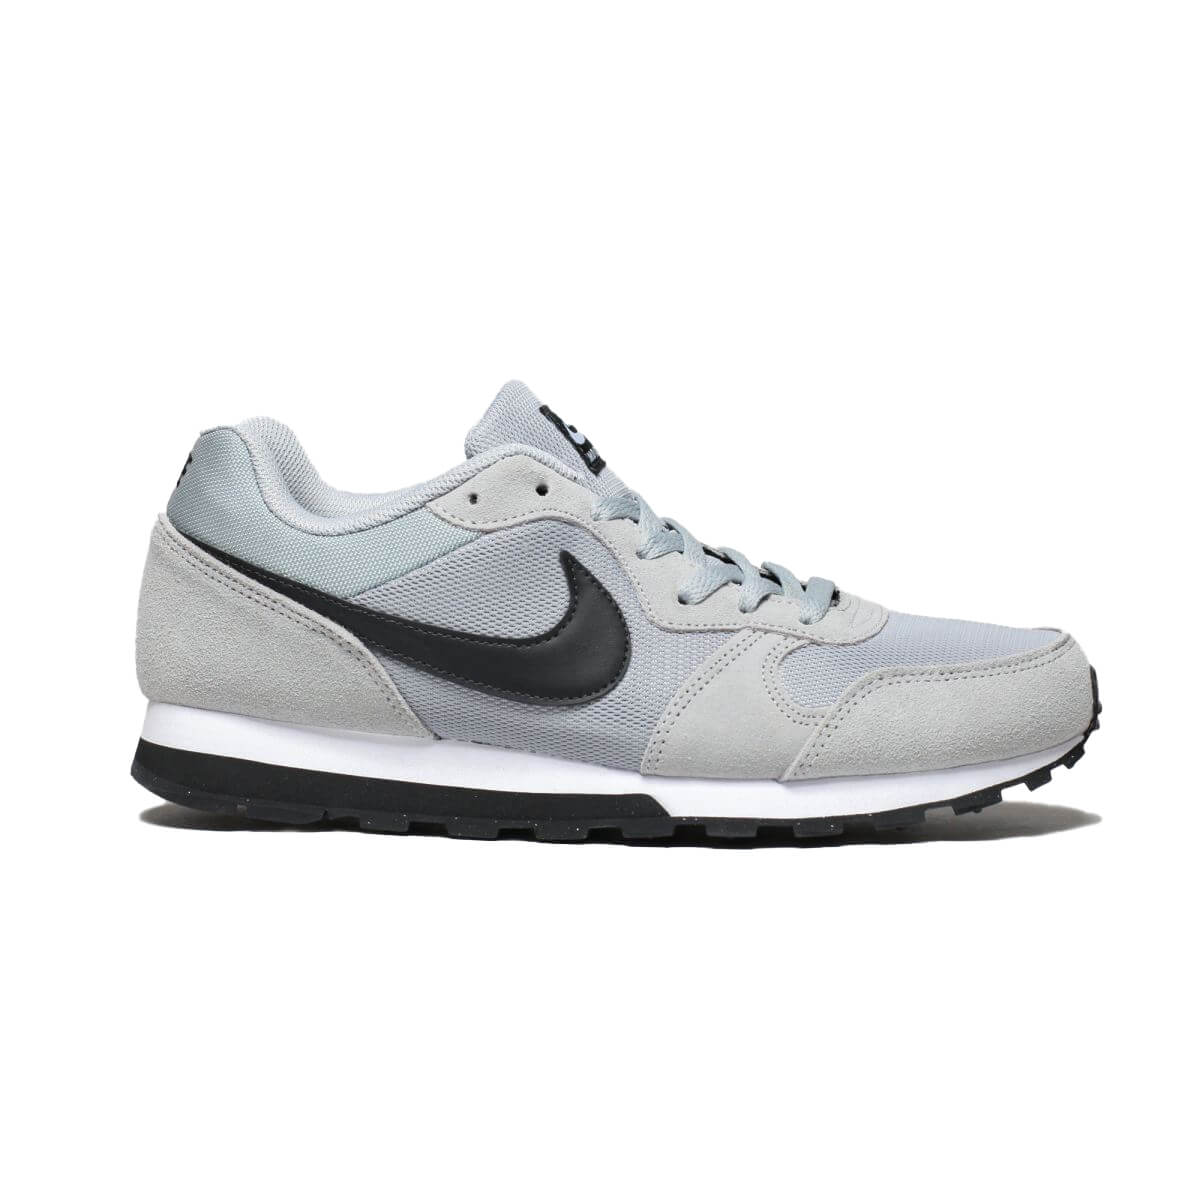 Nike MD Runner 2 Running Shoes Price in Diamu.com.bd